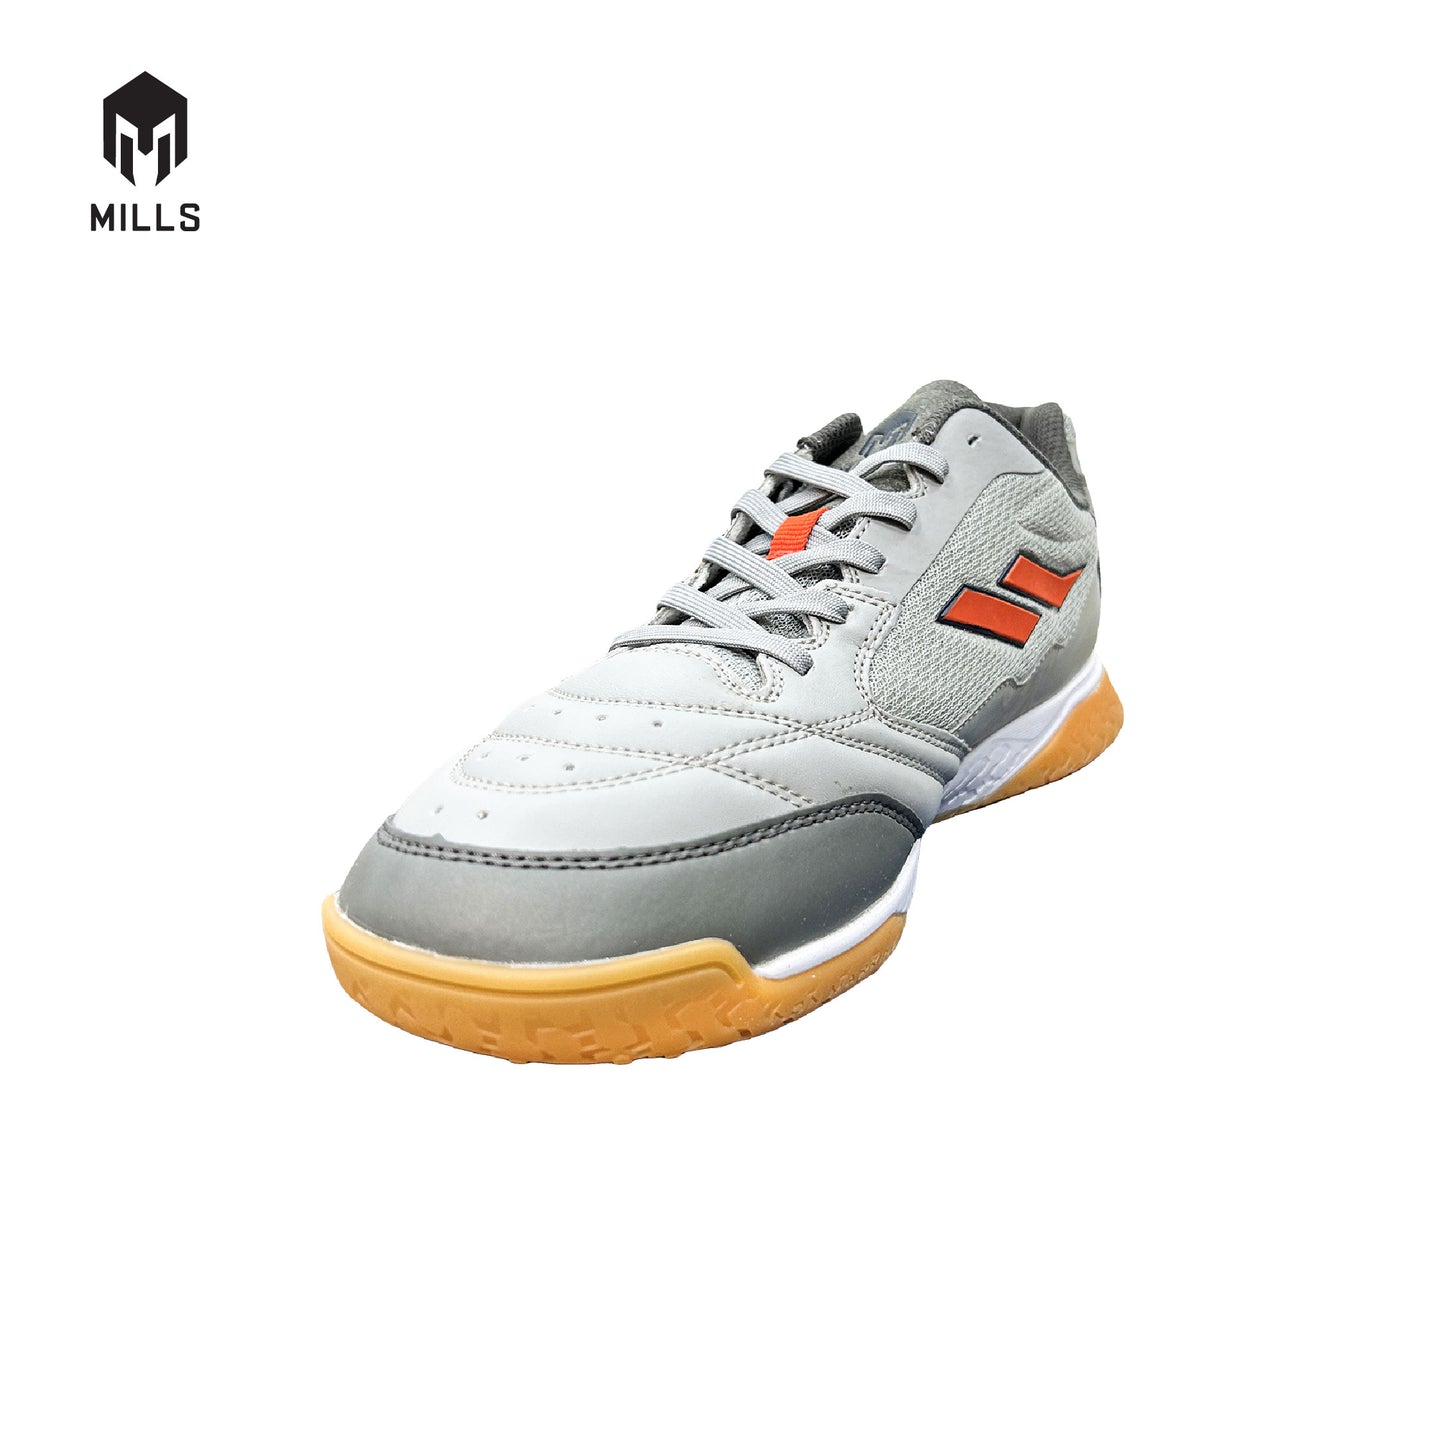 MILLS Sepatu Futsal Voltapro Ginga IN Grey / Orange / Navy 9500107